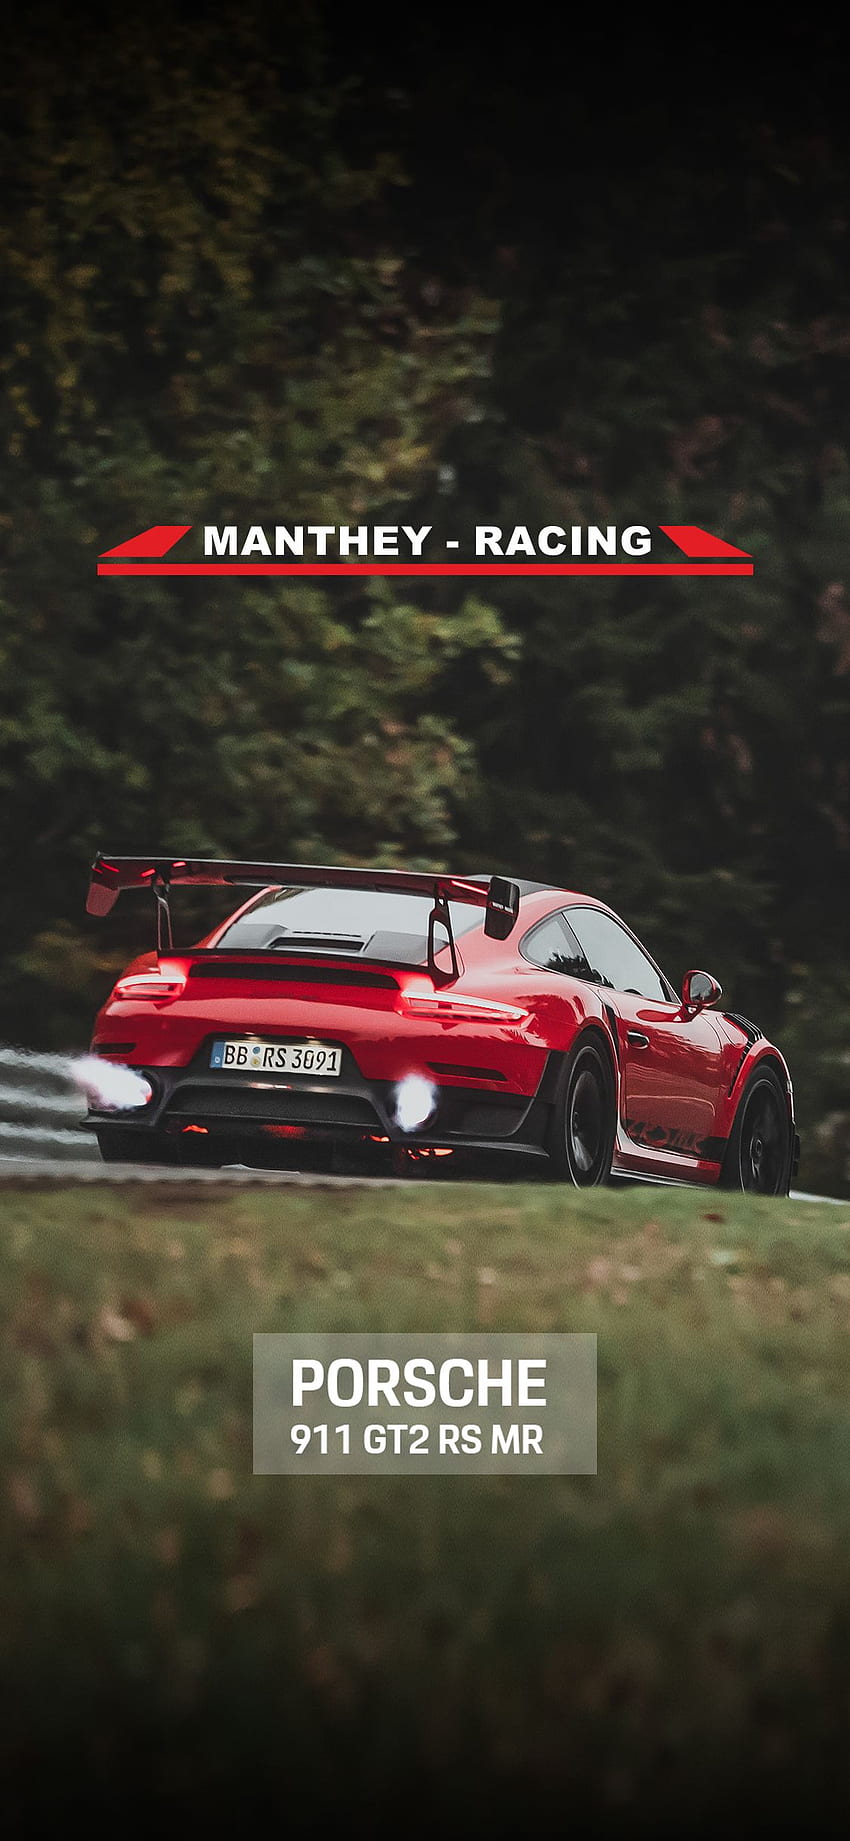 s IPhone X XR Manthey Racing, Porsche 911 GT3 RS HD phone wallpaper